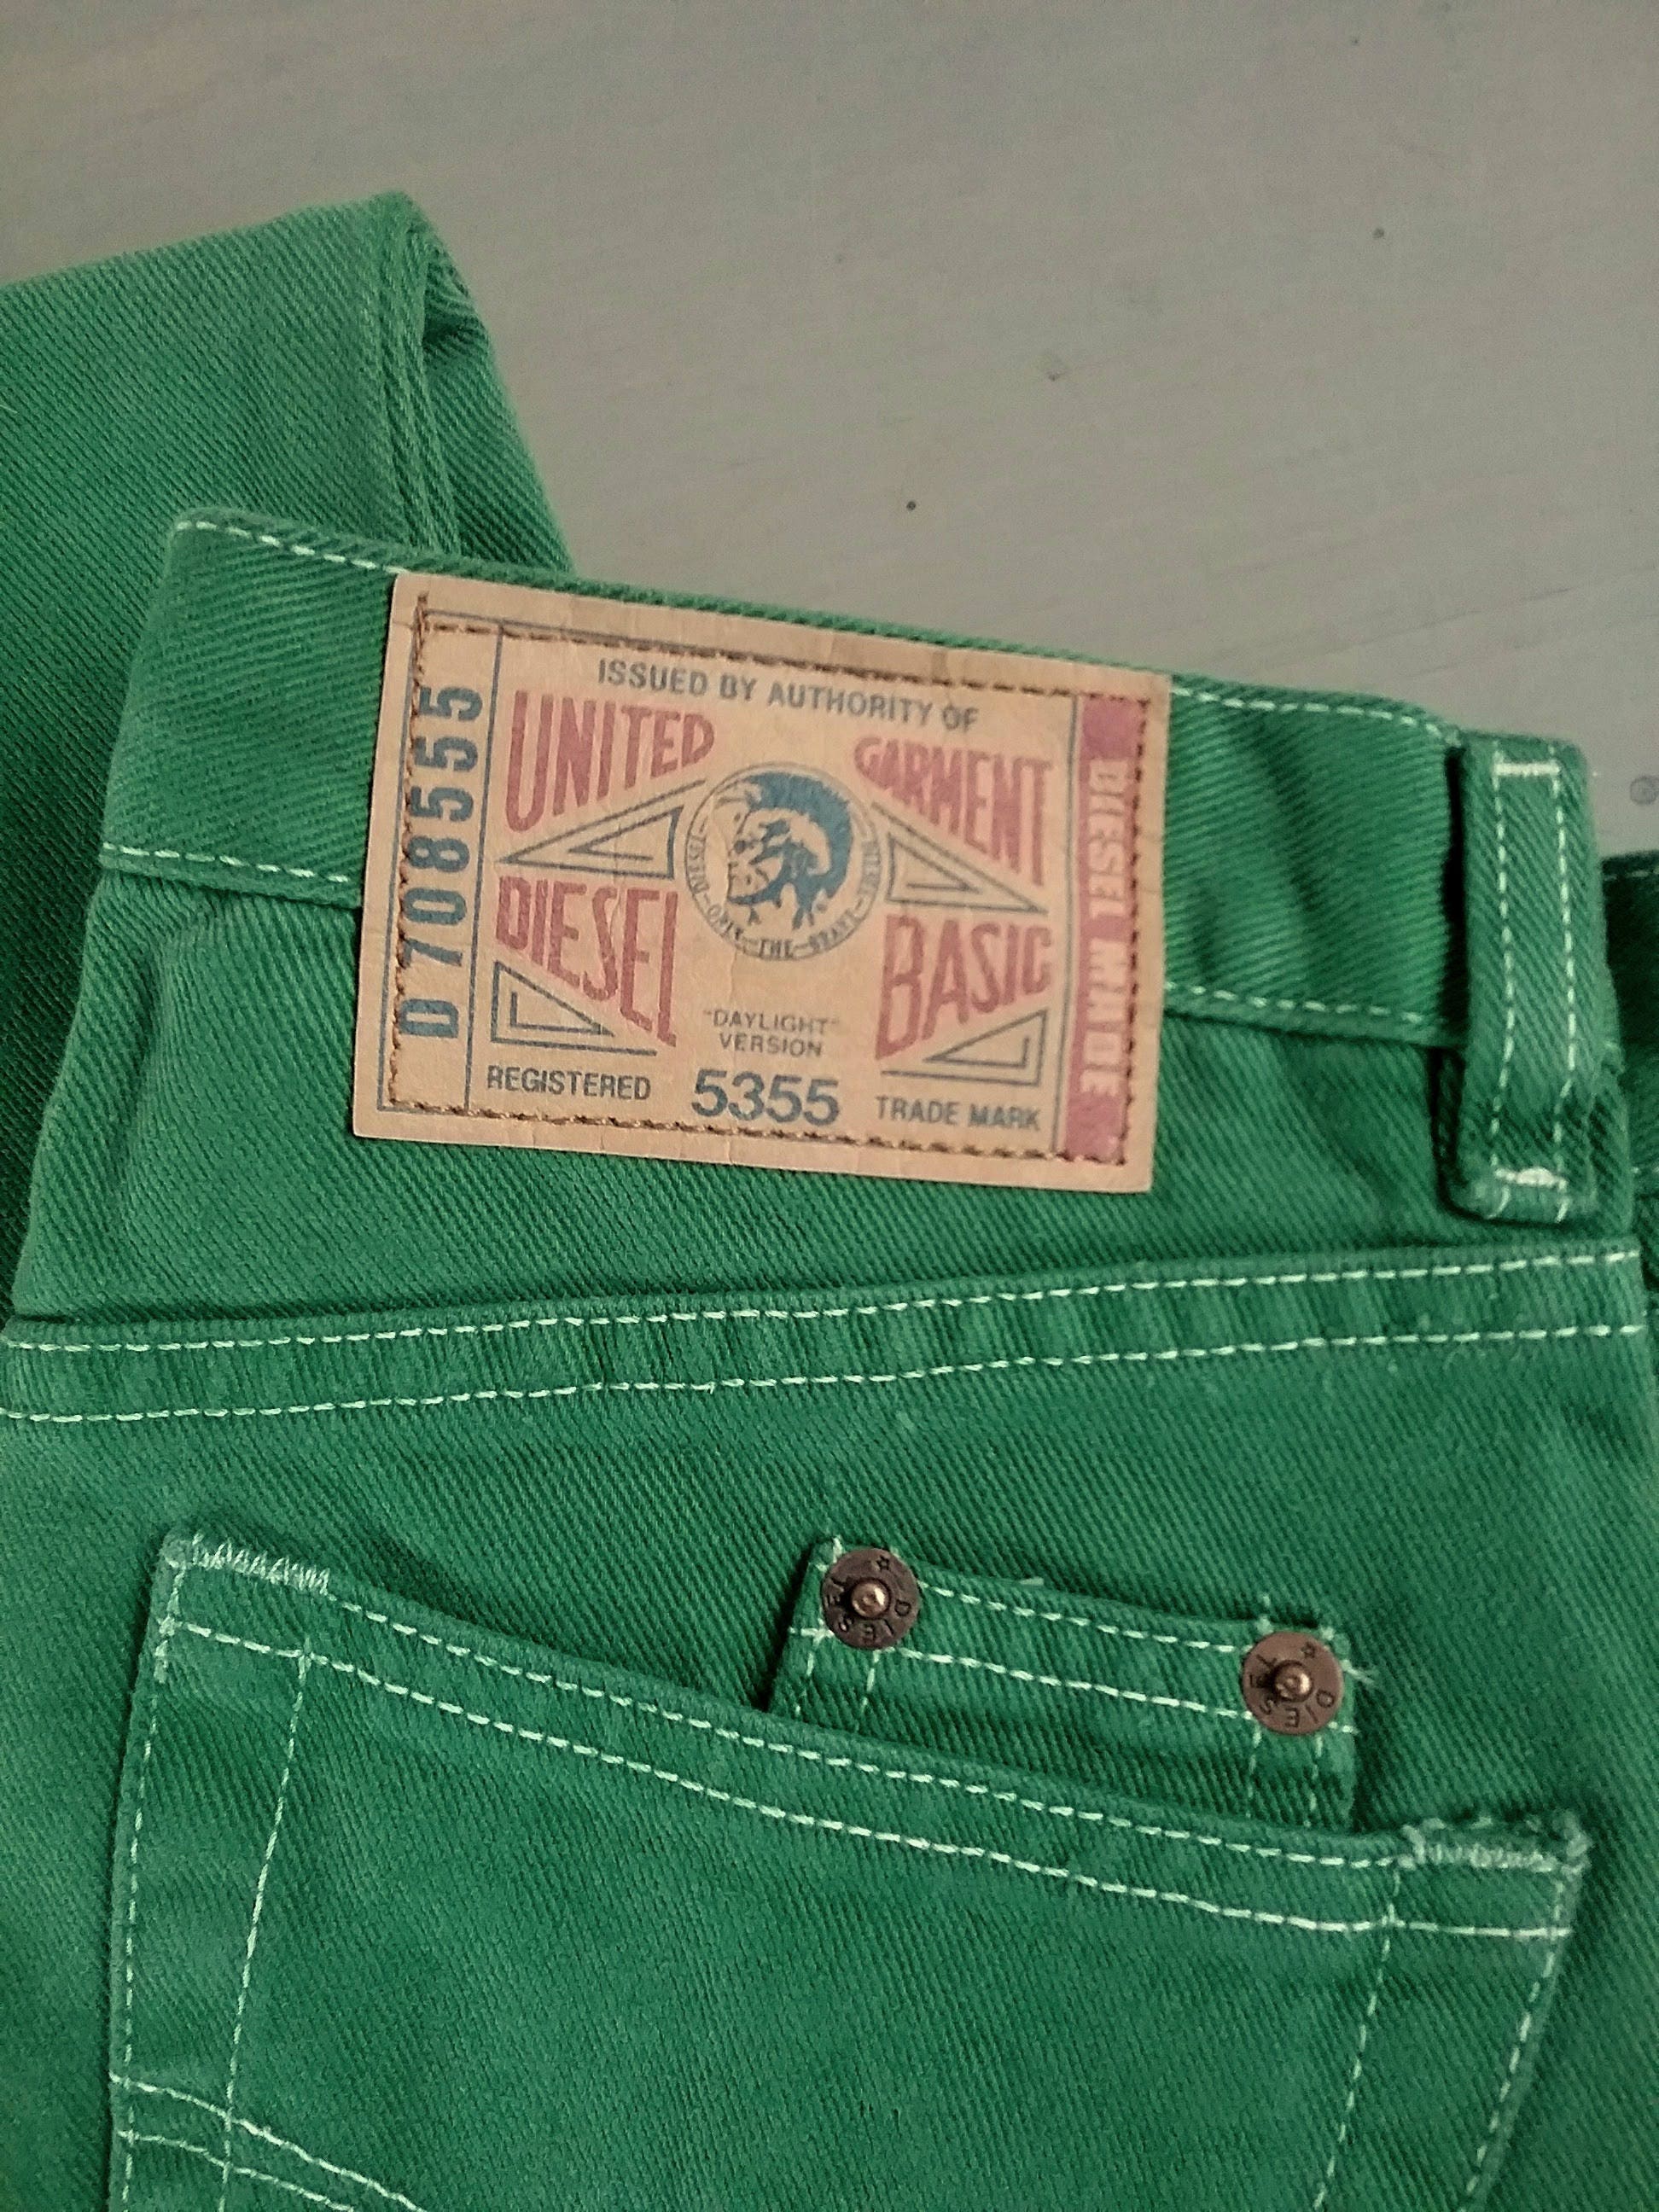 Diesel Jeans, Arizona, Green, 1990s, Boys Fashion, Men, Boys, Measurements,  Subject to Change, Vintage, Other 